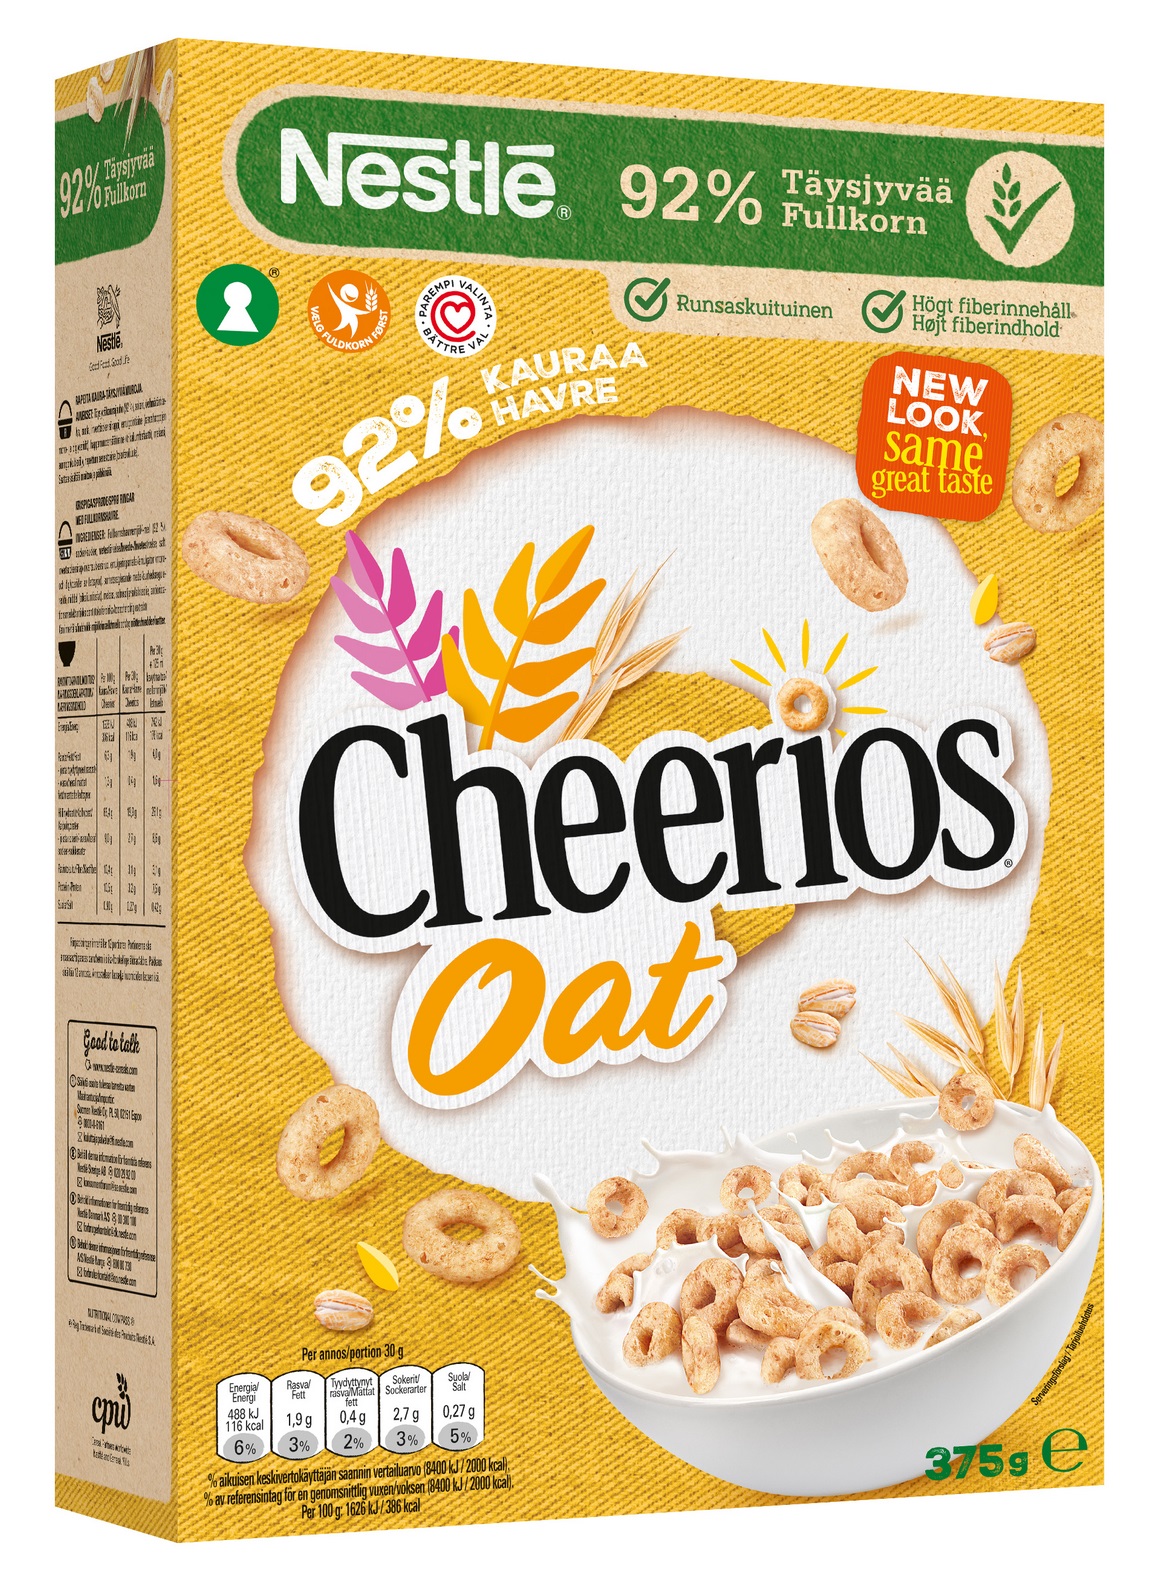 Nestlé Cheerios Oat wholegrain cereal 375g 